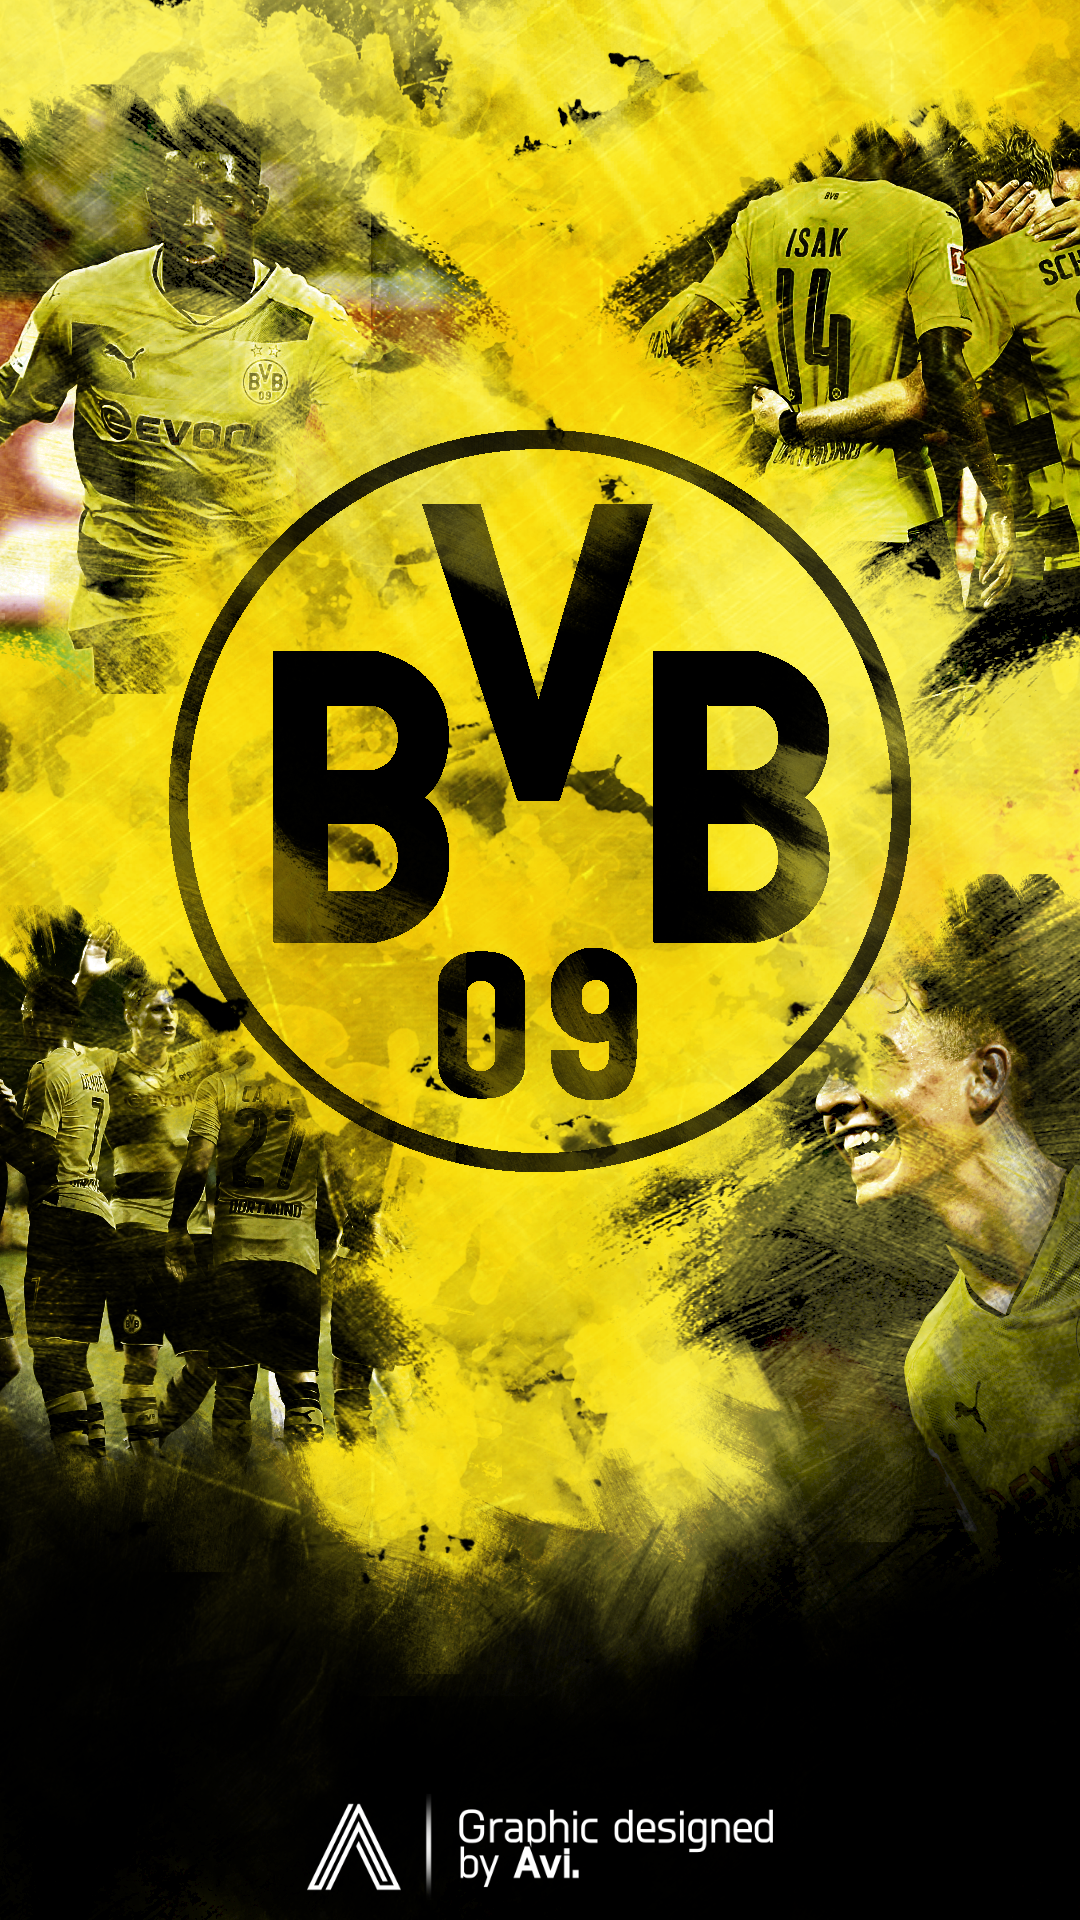 Bvb Wallpaper Borussia Dortmund Logo 270216 Hd Wallpaper Backgrounds Download